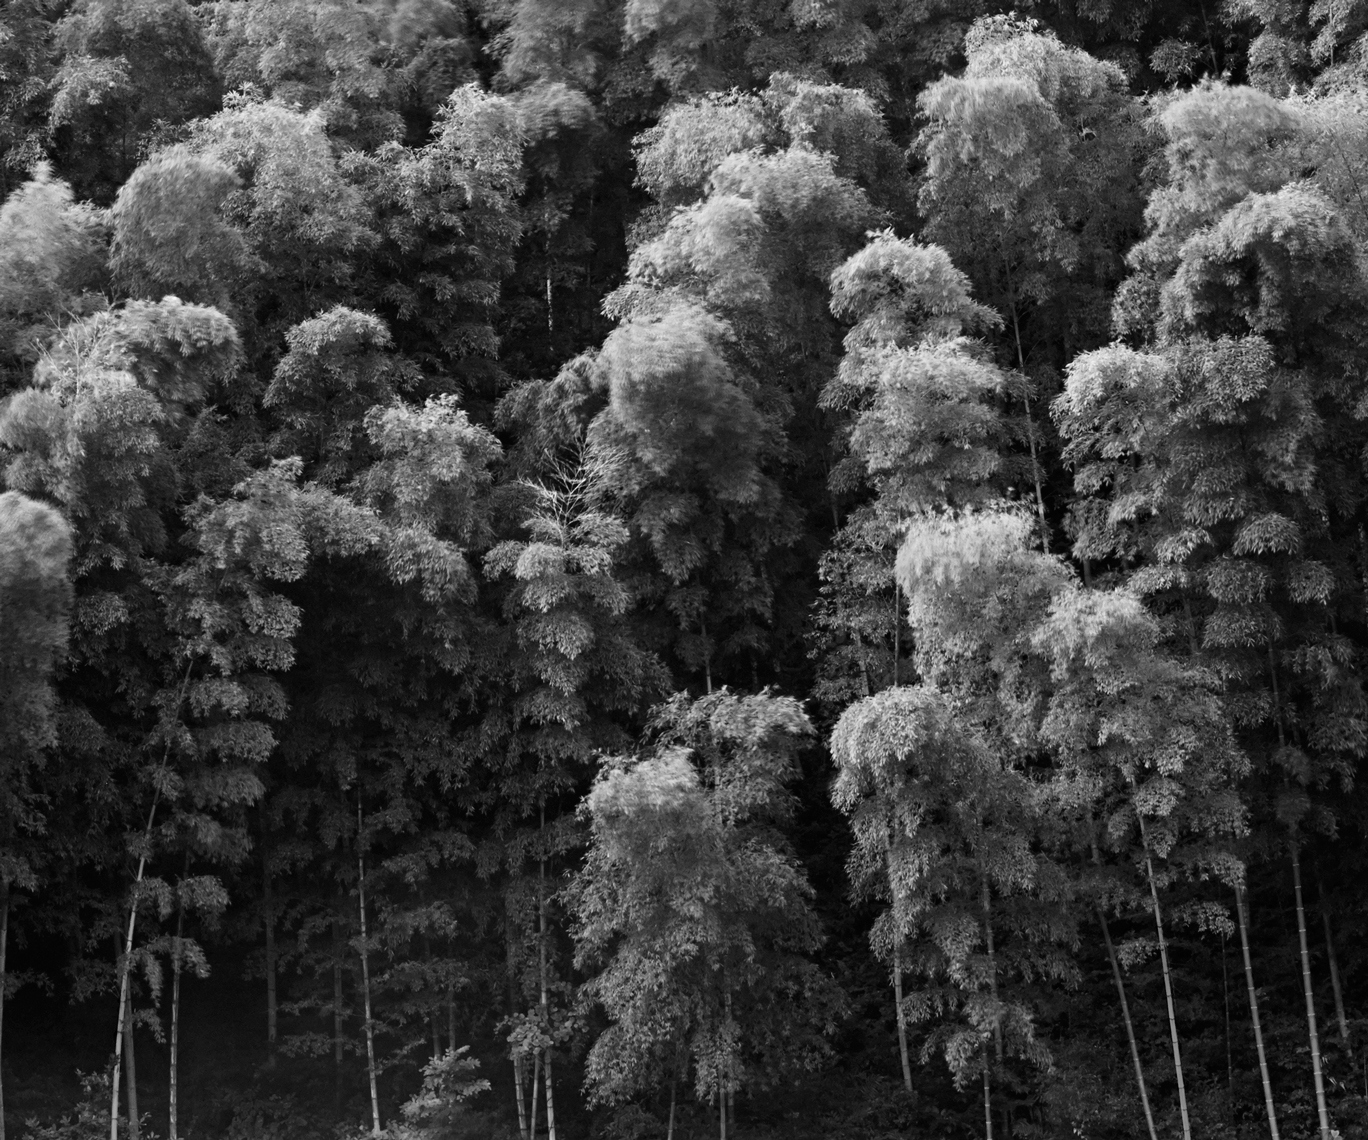 Jon Wyatt Photography - bamboo forest in Anhui Province, China